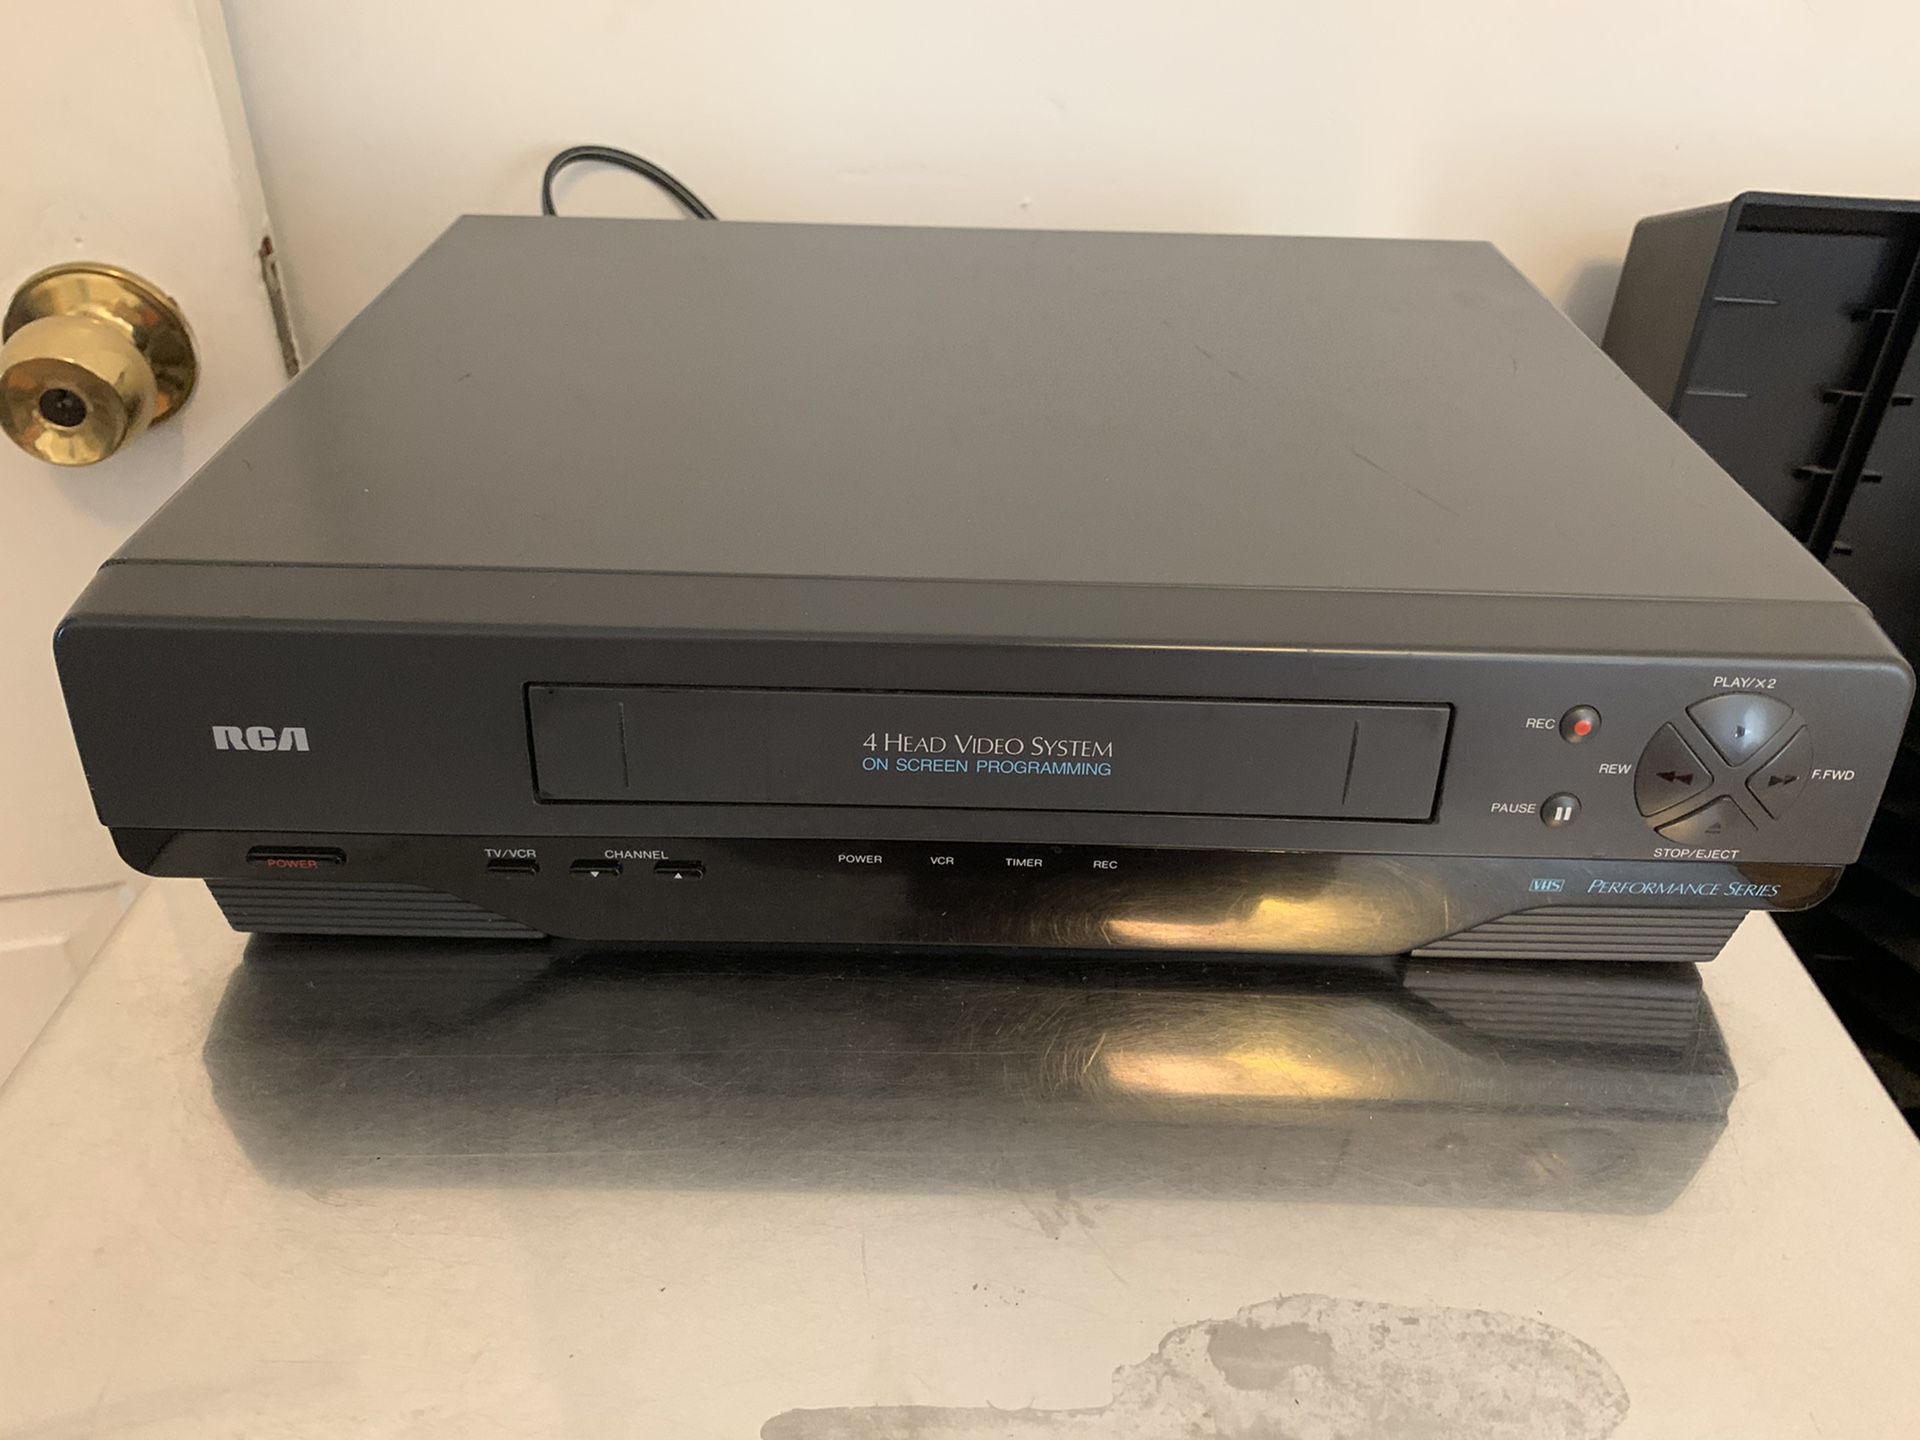 RCA: VCR player